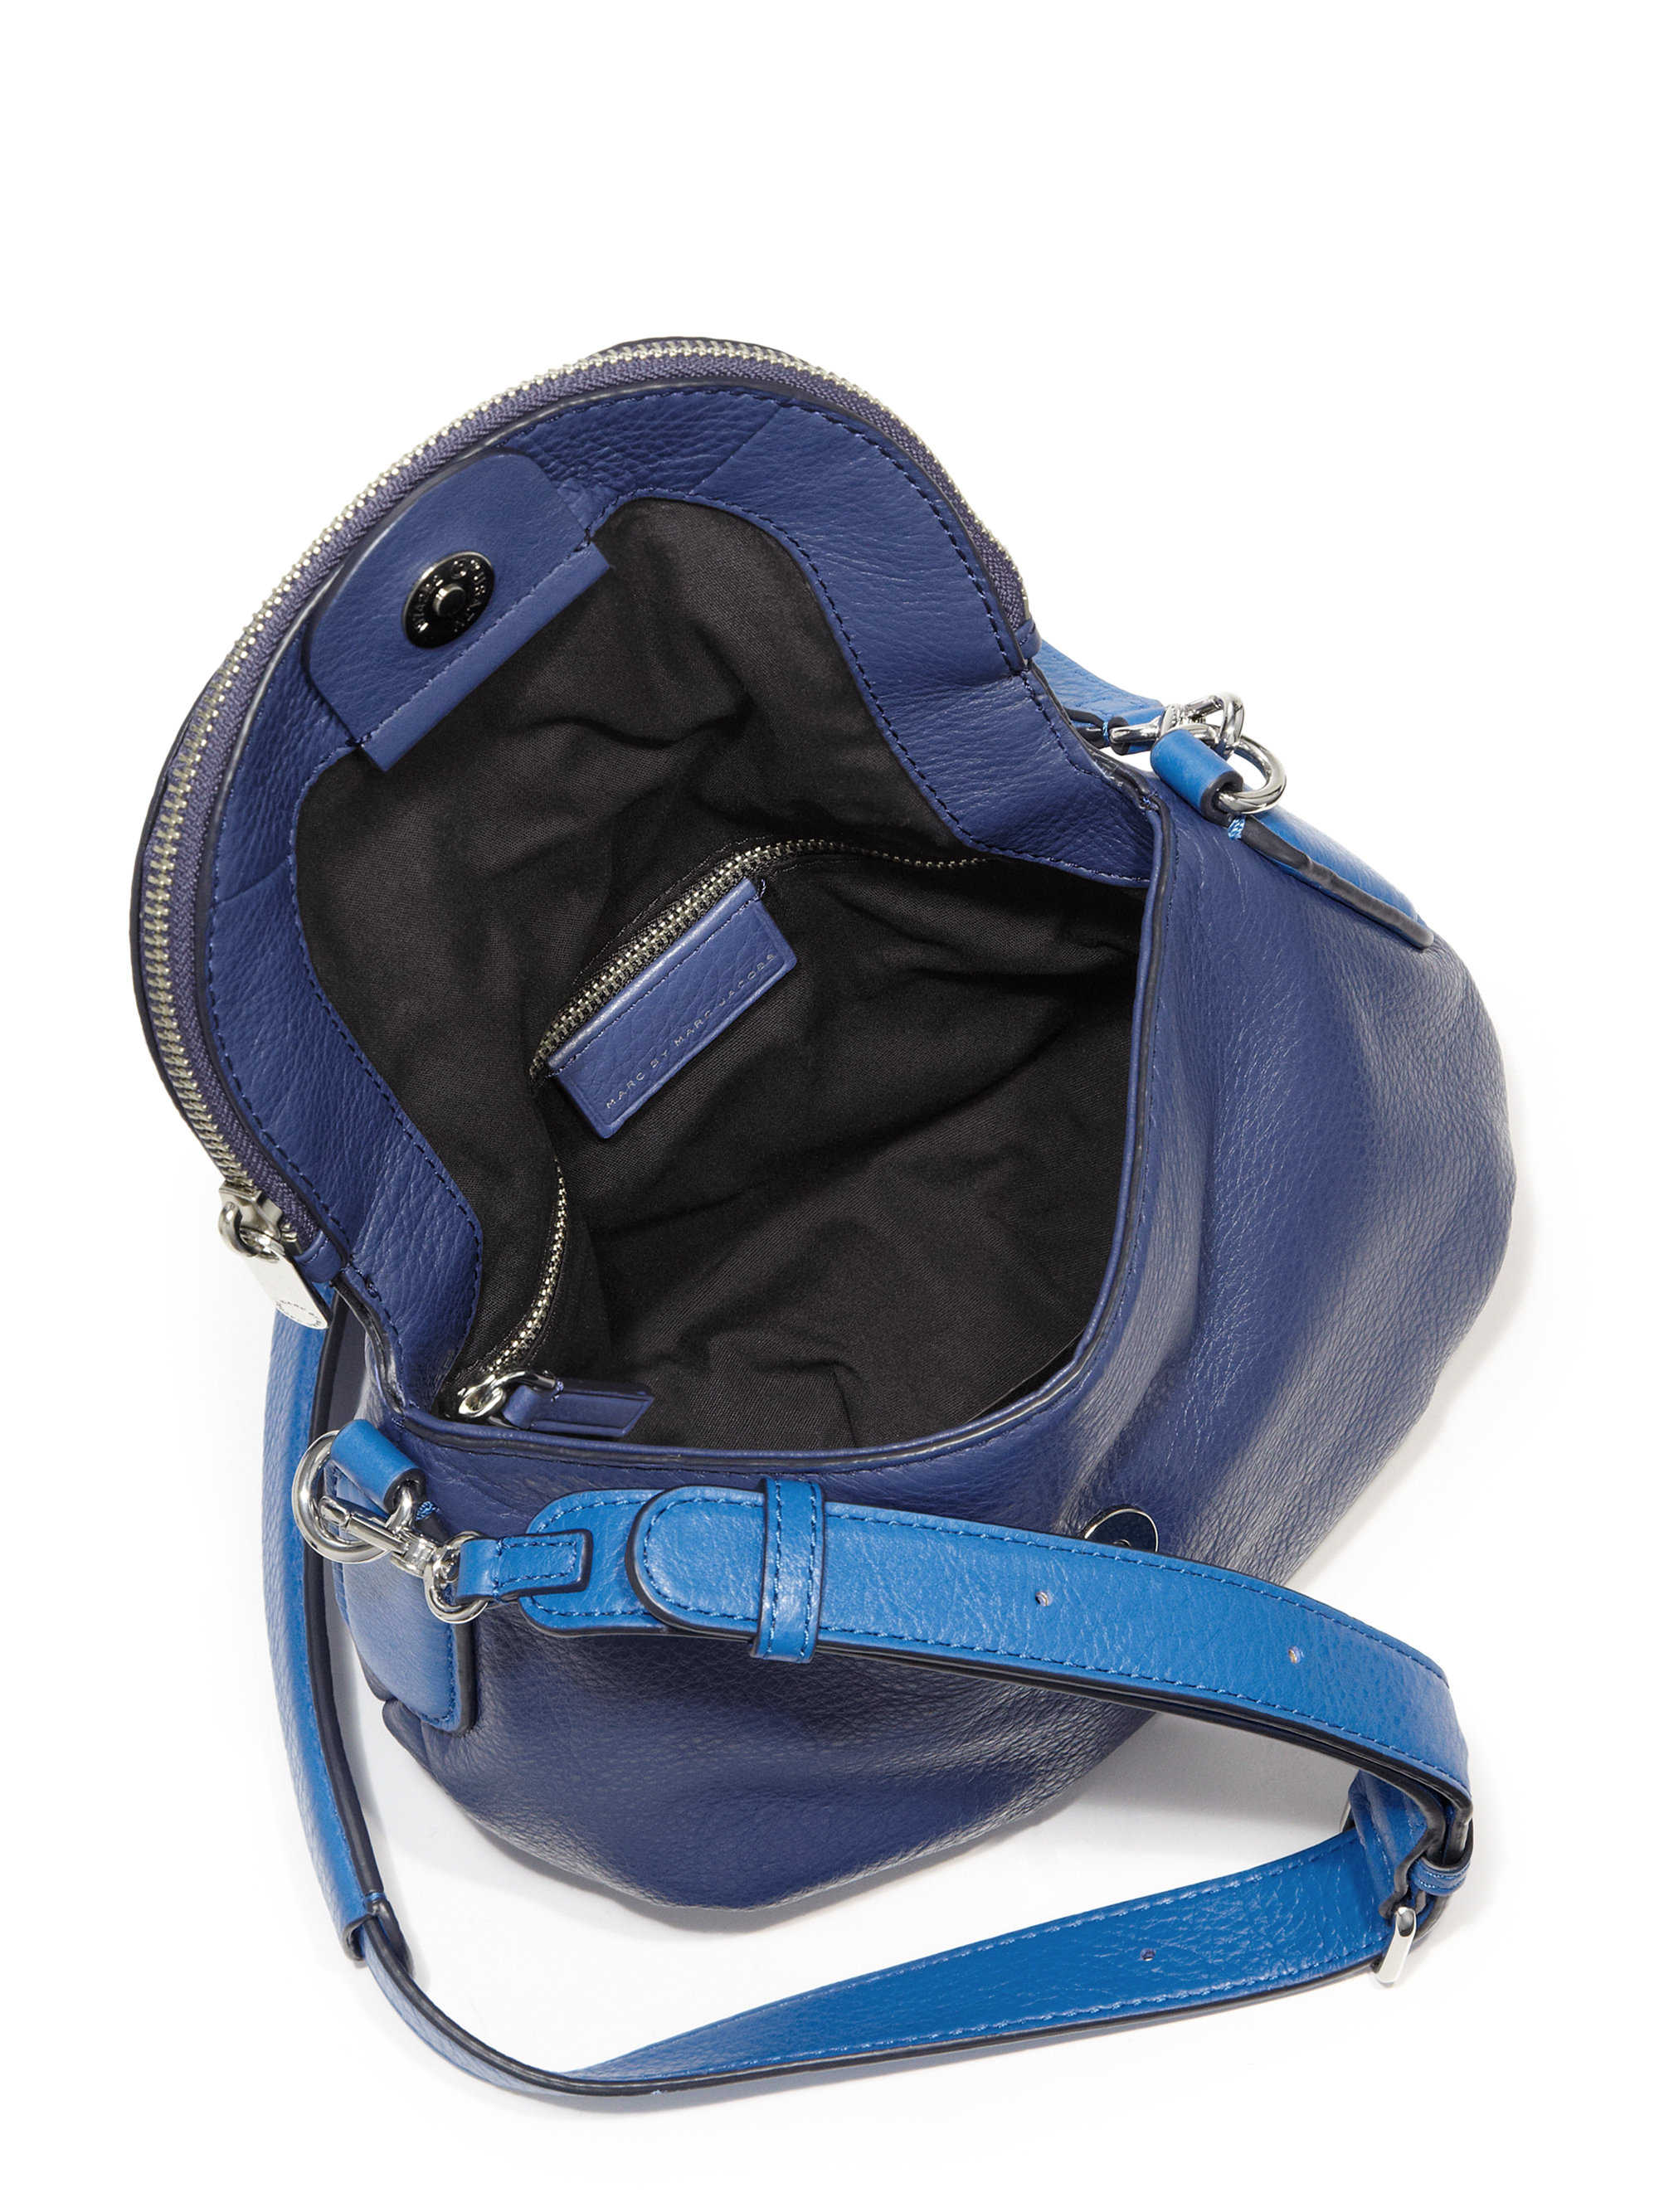 Marc By Marc Jacobs New Q Natasha Mini Two-Tone Leather Crossbody Bag in Deep Blue (Blue) - Lyst